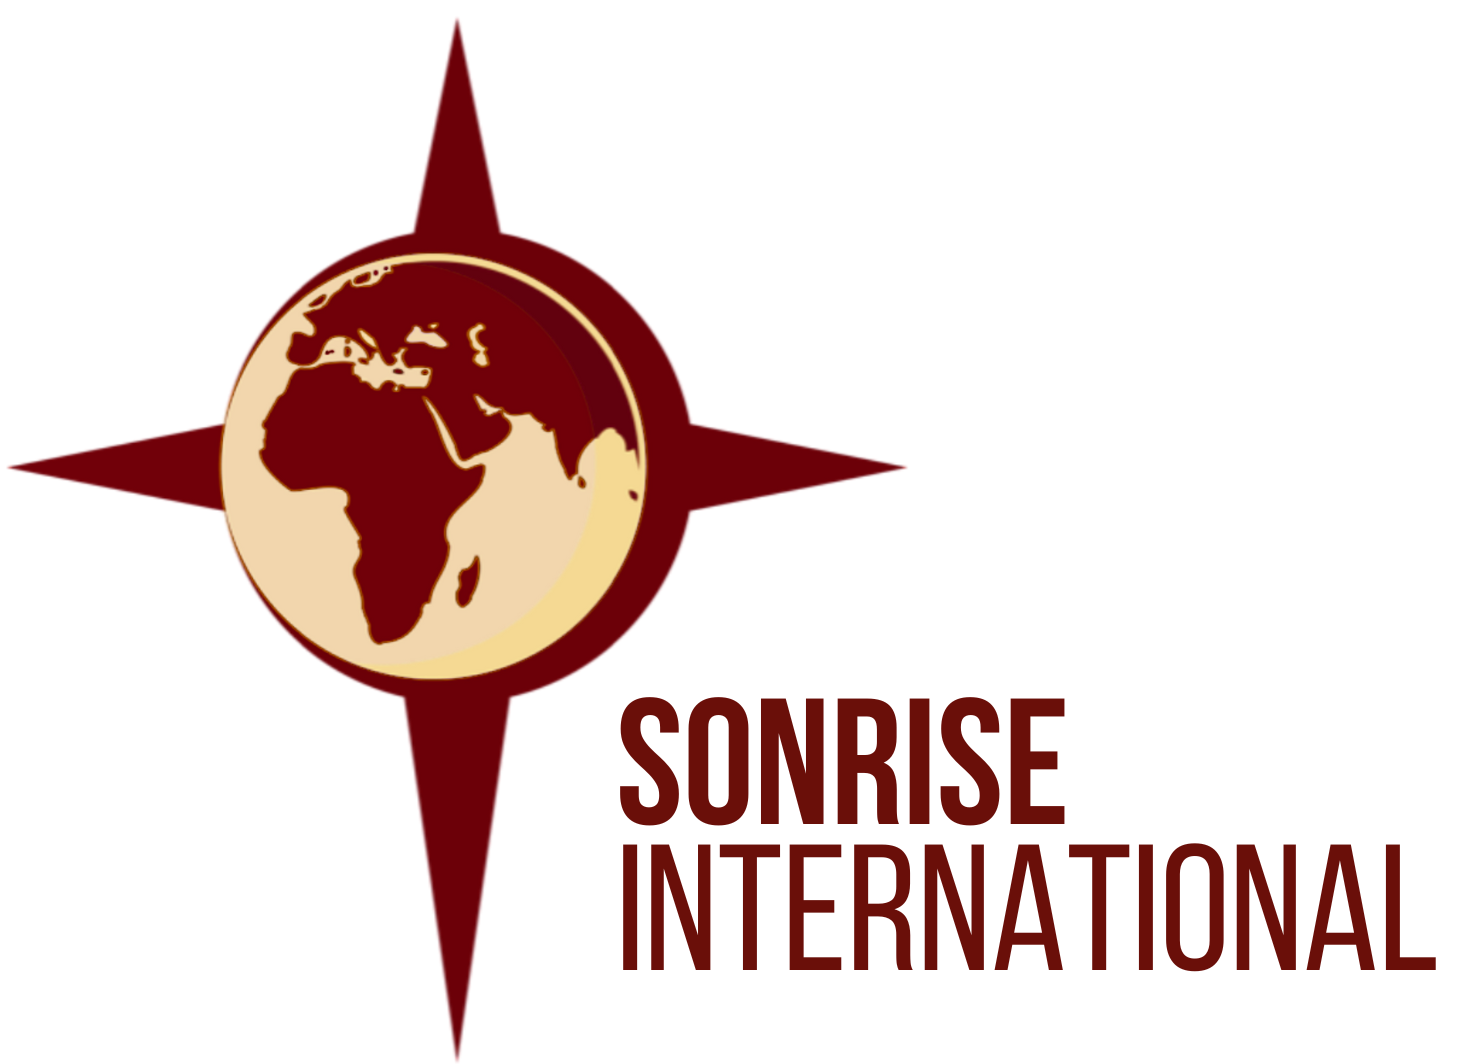 Sonrise International